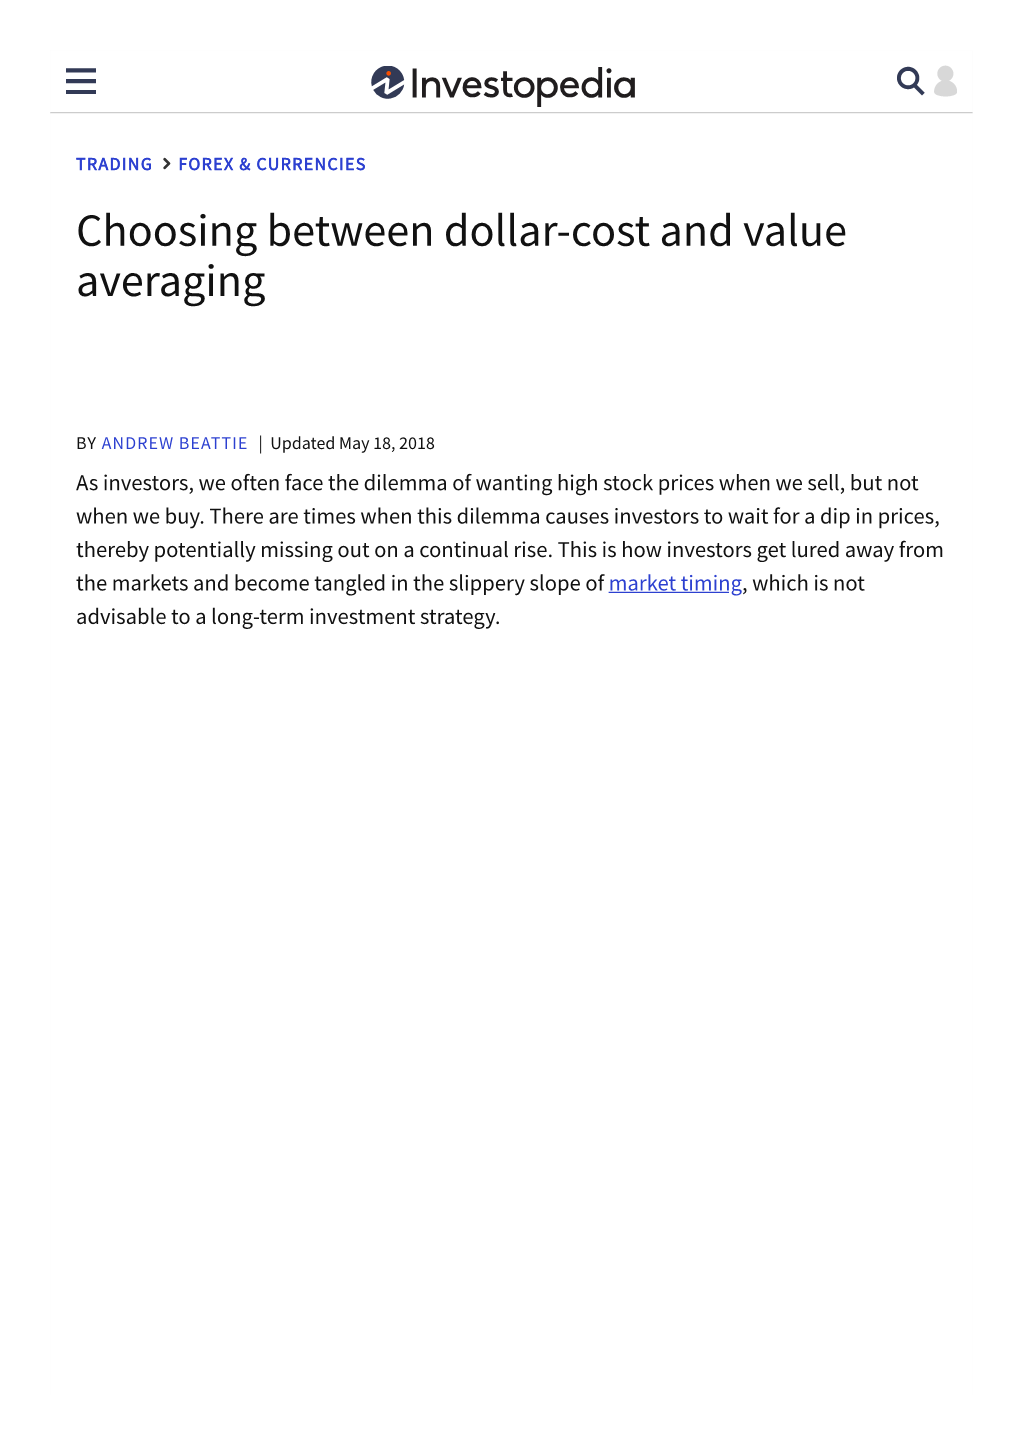 Choosing Between Dollar-Cost and Value Averaging